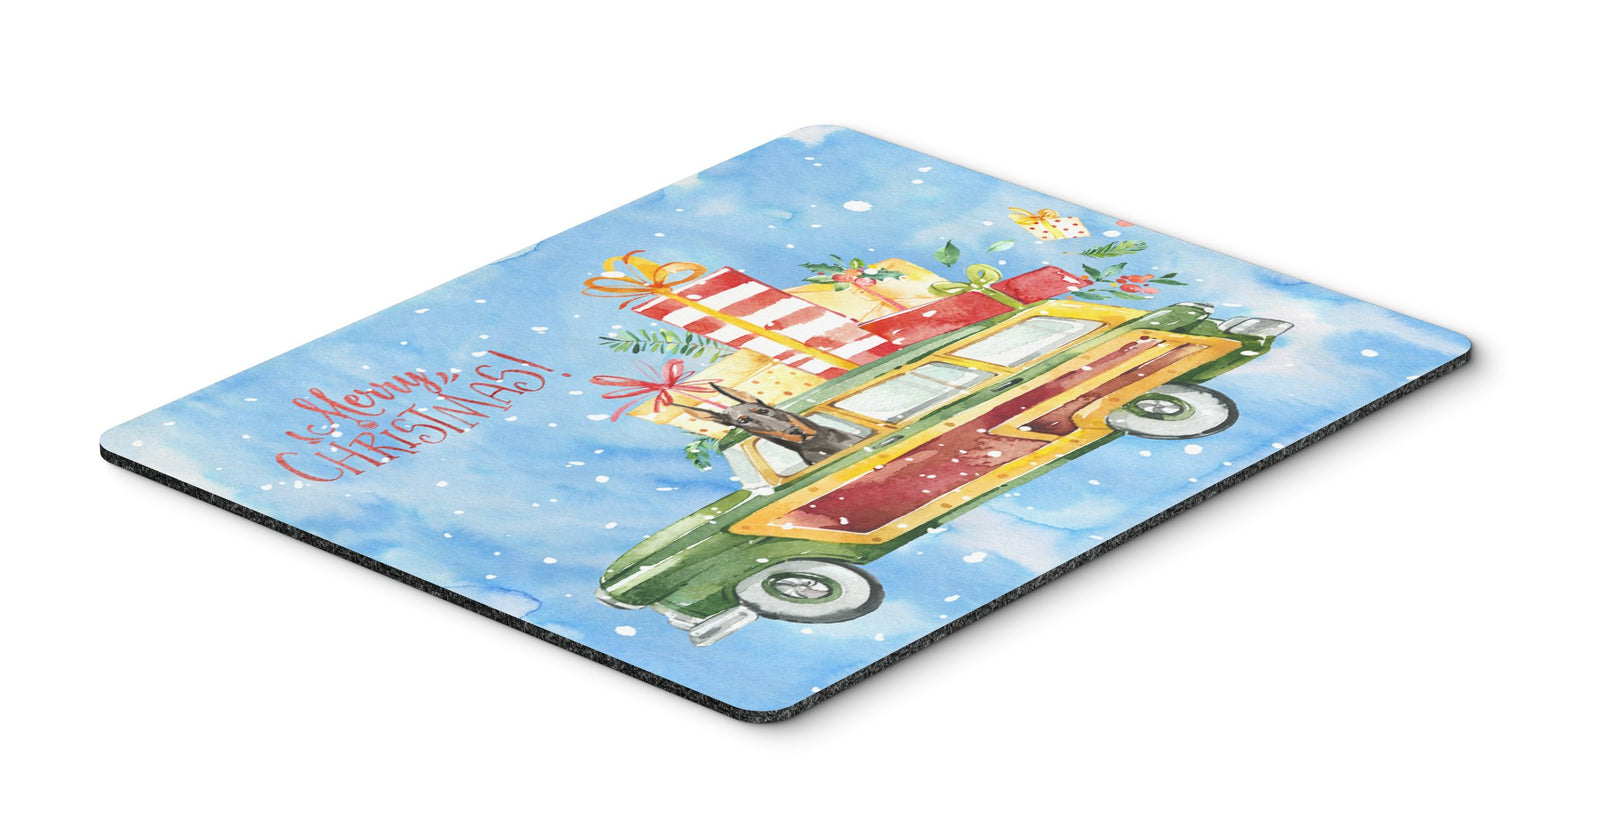 Merry Christmas Doberman Pinscher Mouse Pad, Hot Pad or Trivet CK2404MP by Caroline's Treasures